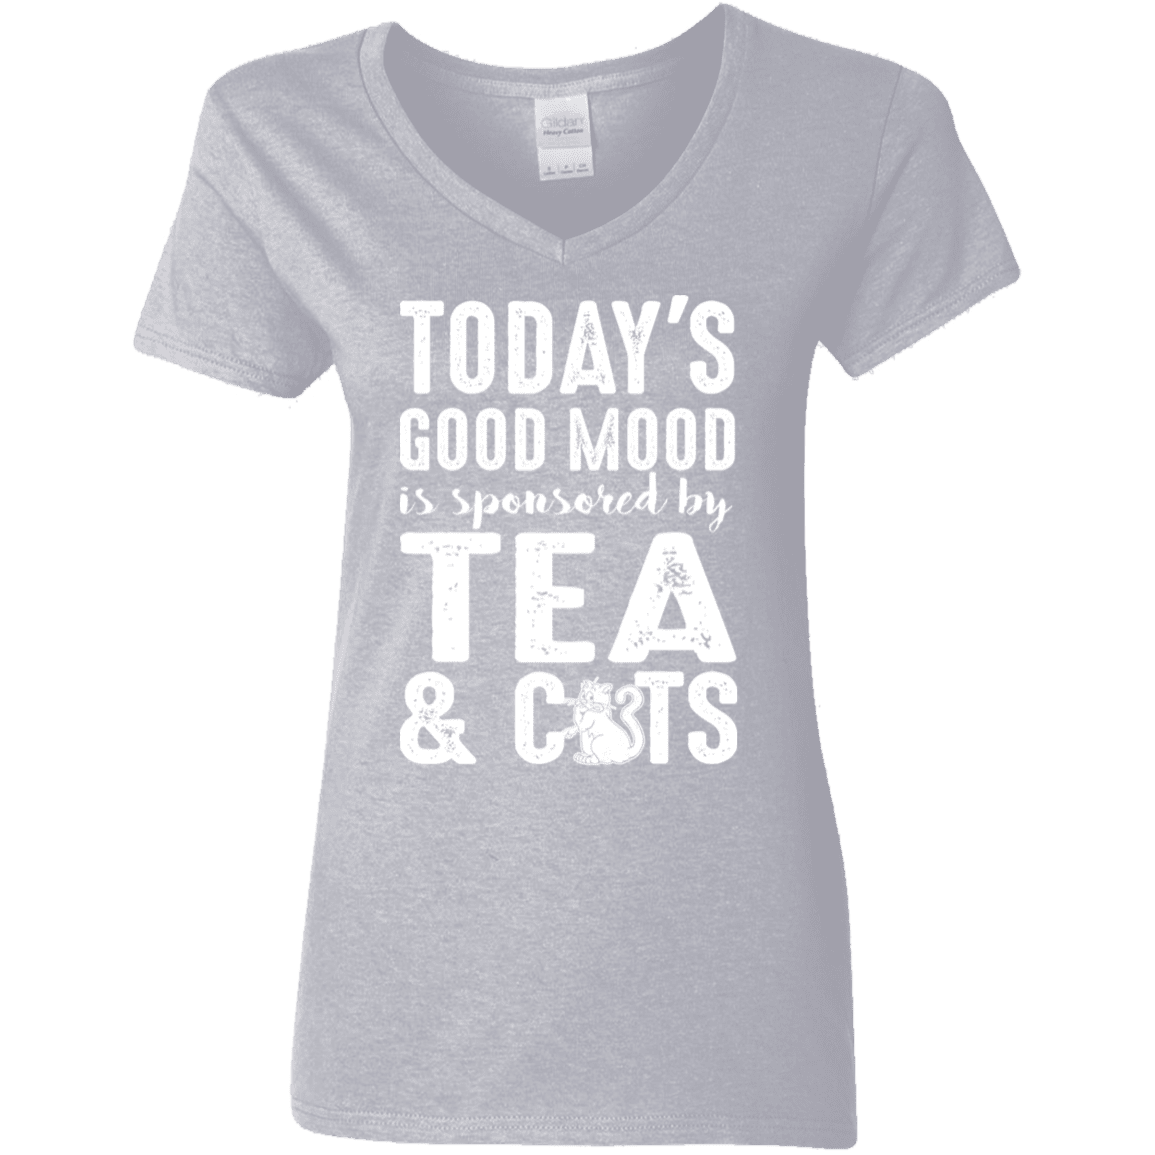 Today's Good Mood Tea & Cats - Ladies V Neck.